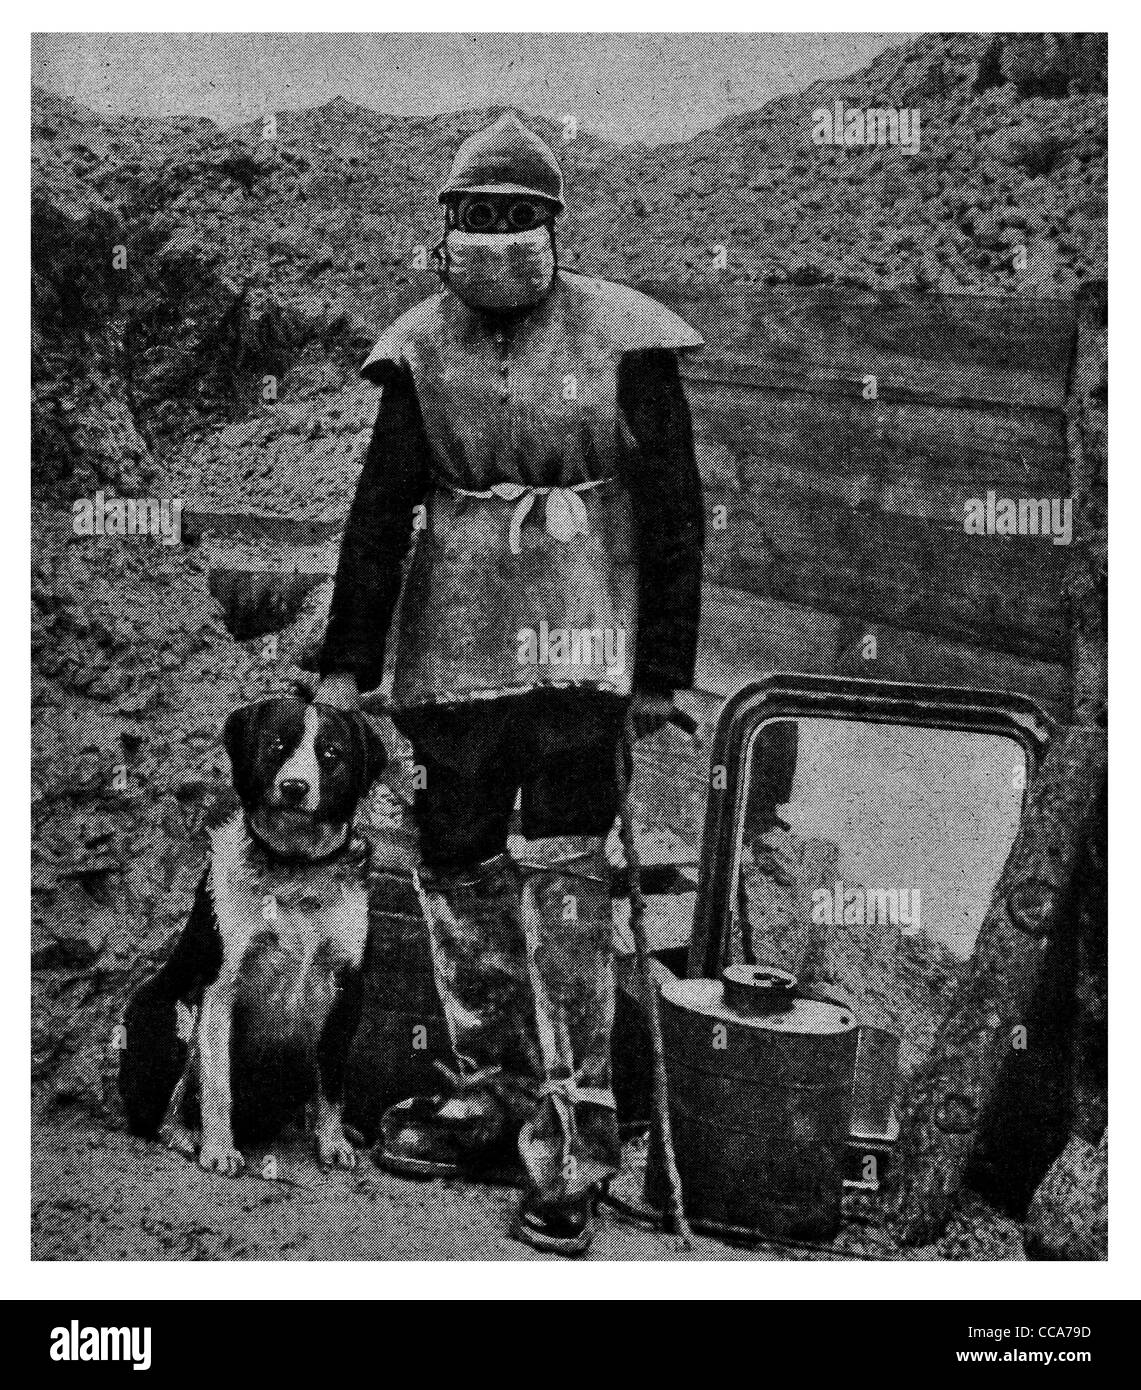 1916 French officer trench uniform helmet mask goggles sheepskin boots sprayer for poison gas mirror patrol dog respirator Stock Photo